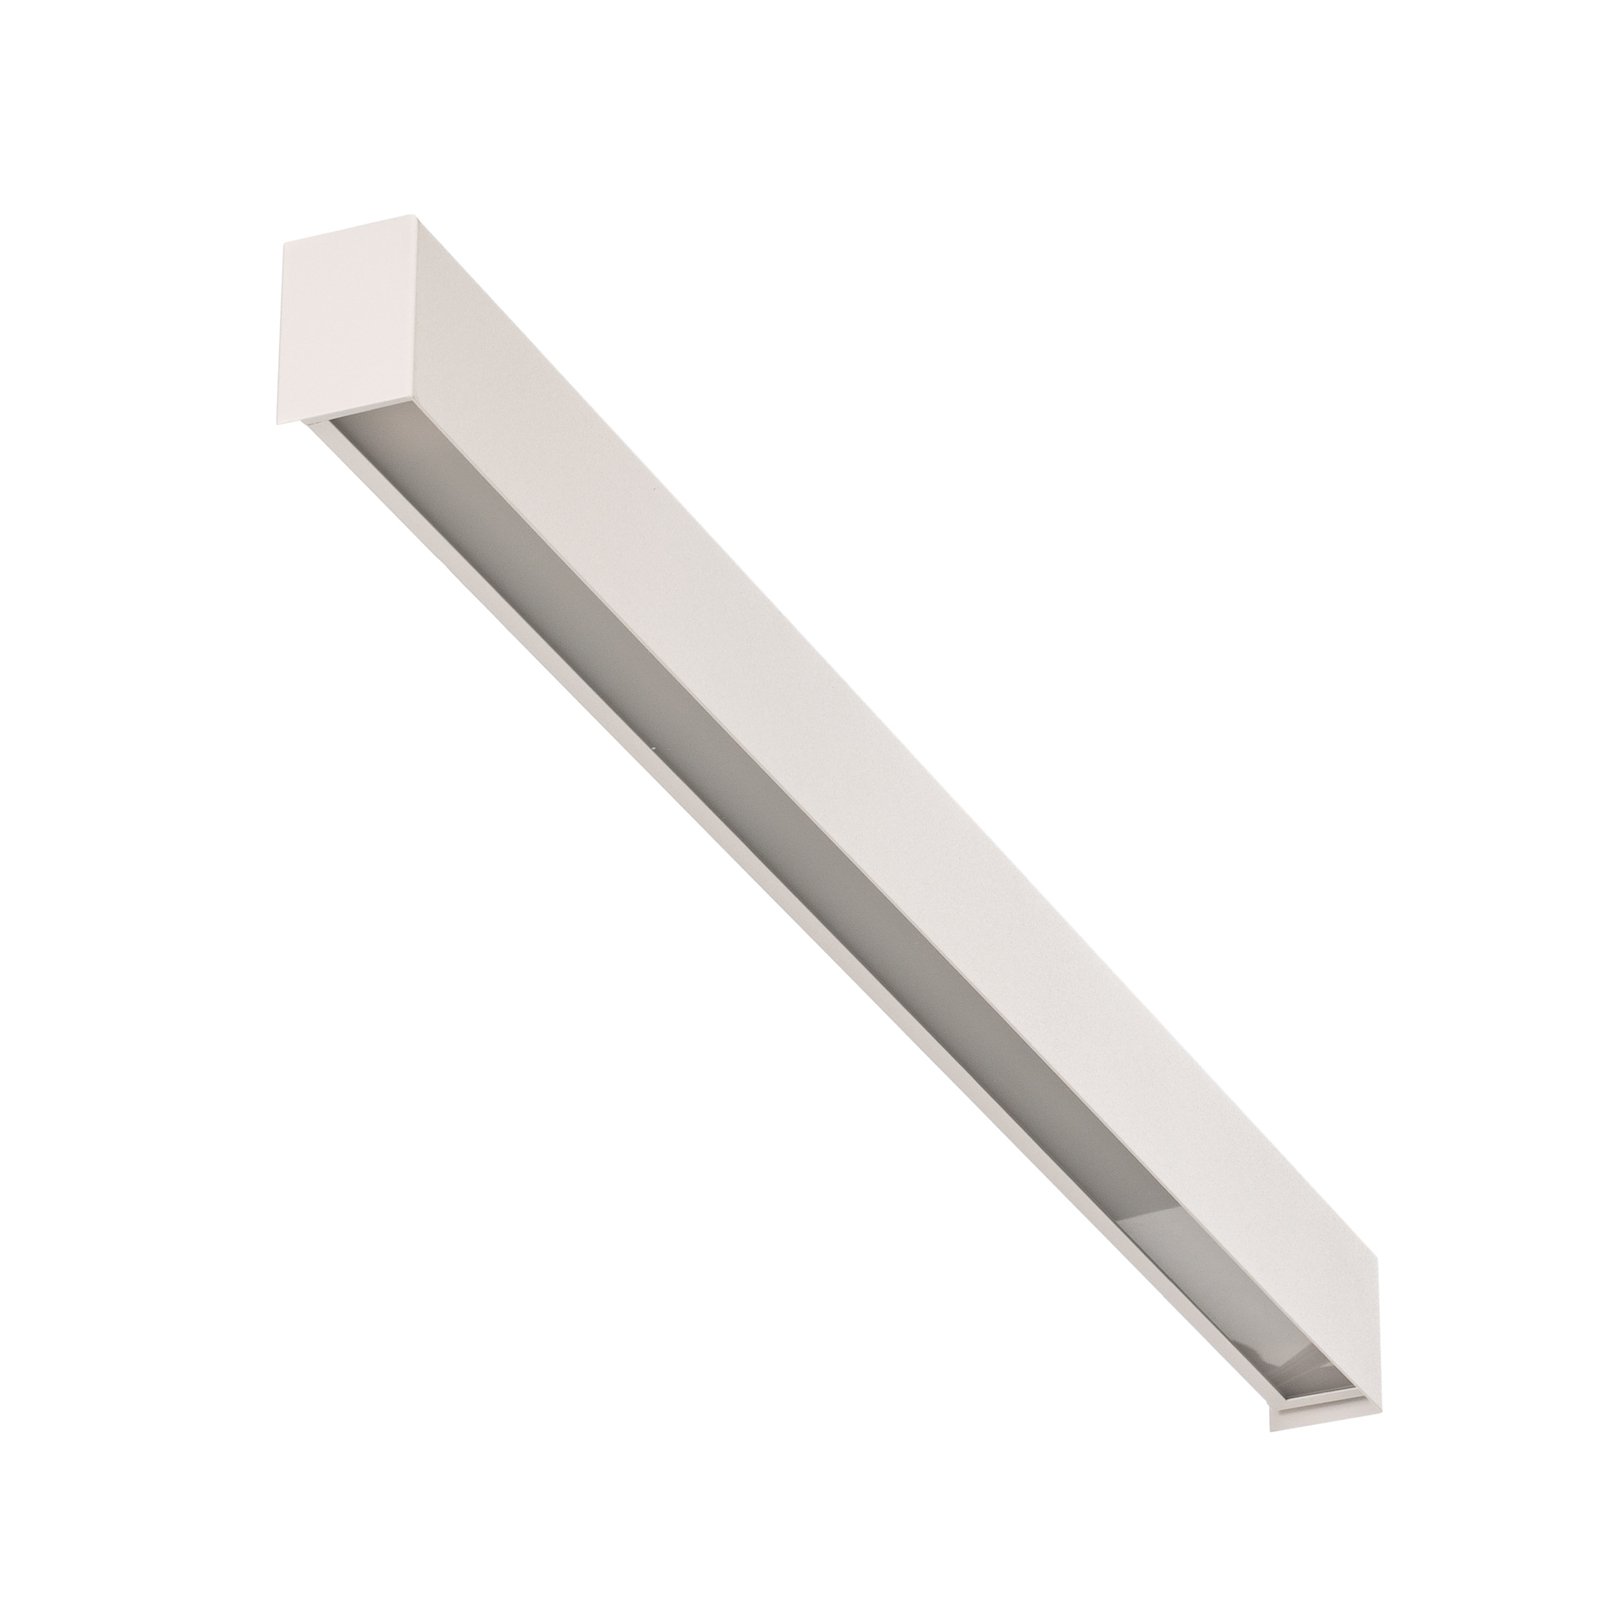 Straight M wandlamp, 92 cm, wit